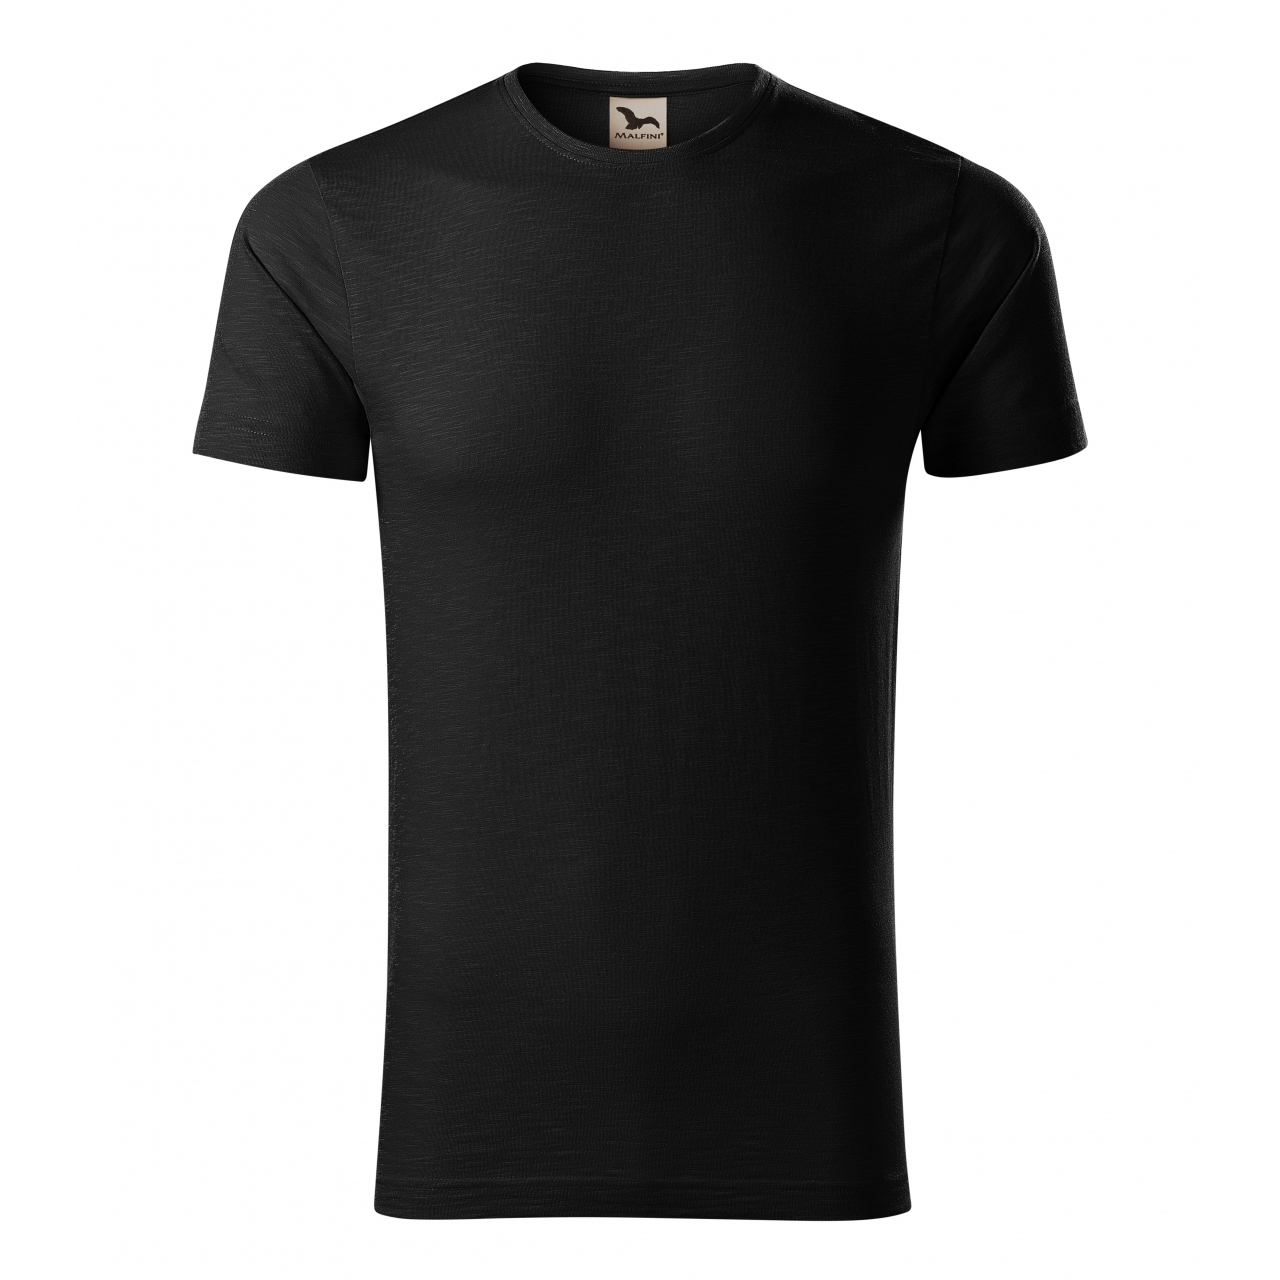 Tričko pánské Malfini Native - černé, XL